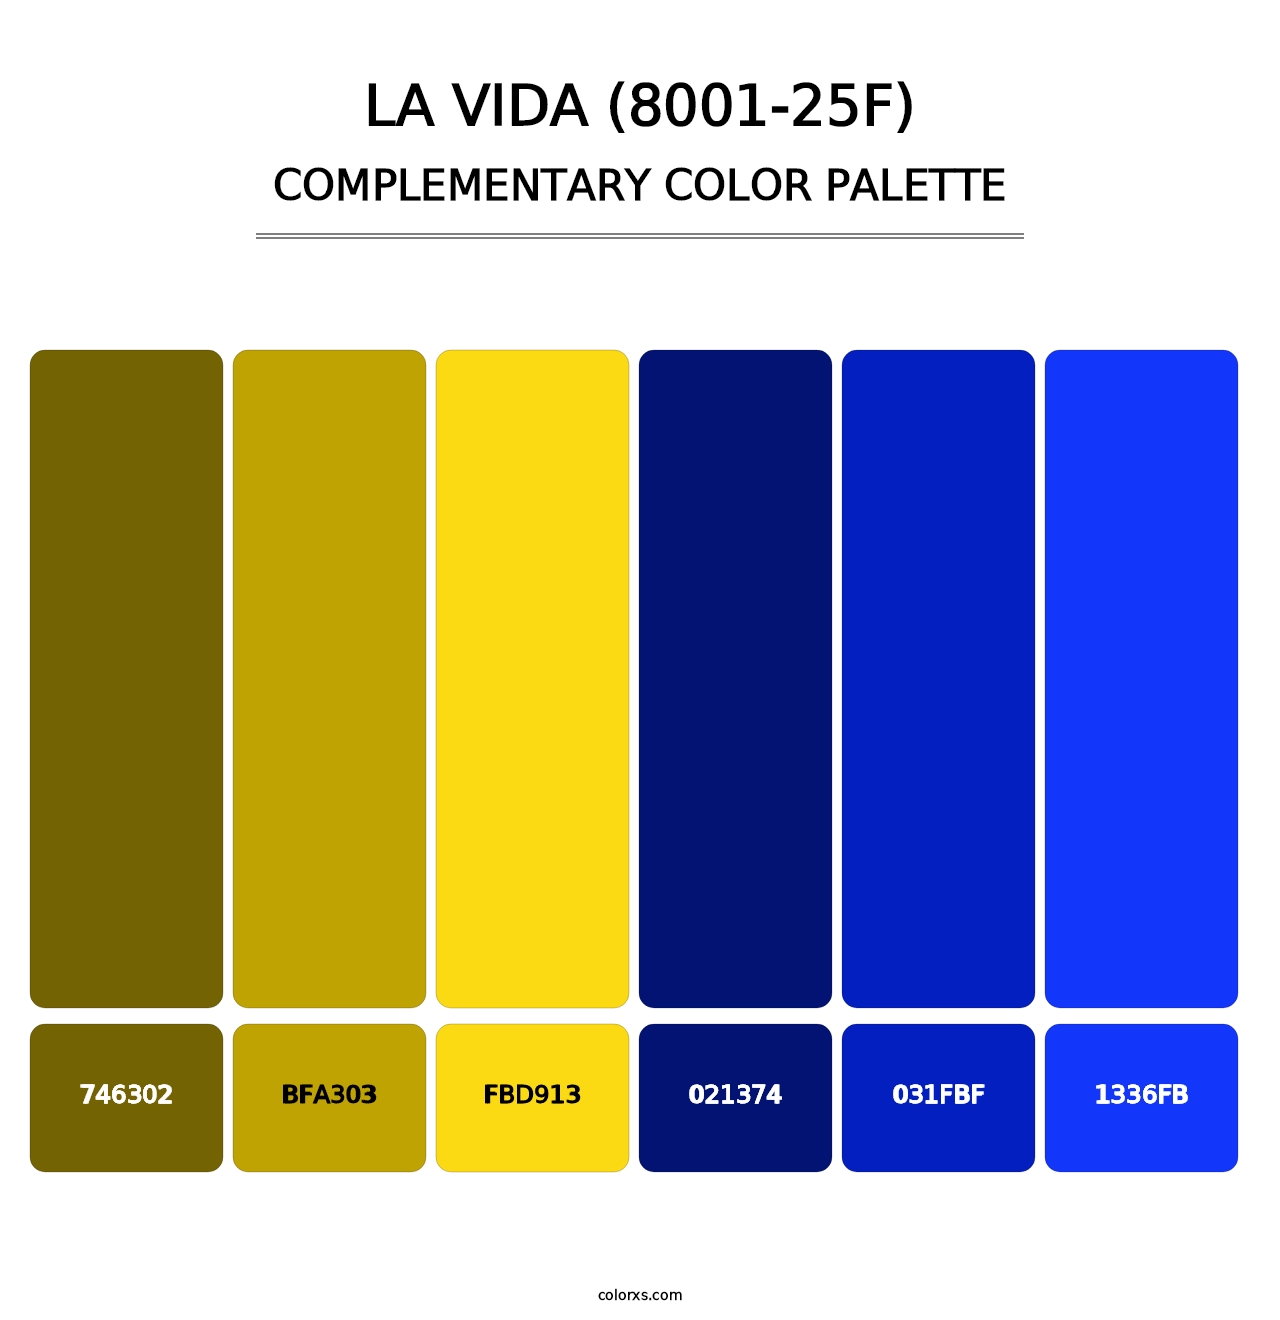 La Vida (8001-25F) - Complementary Color Palette